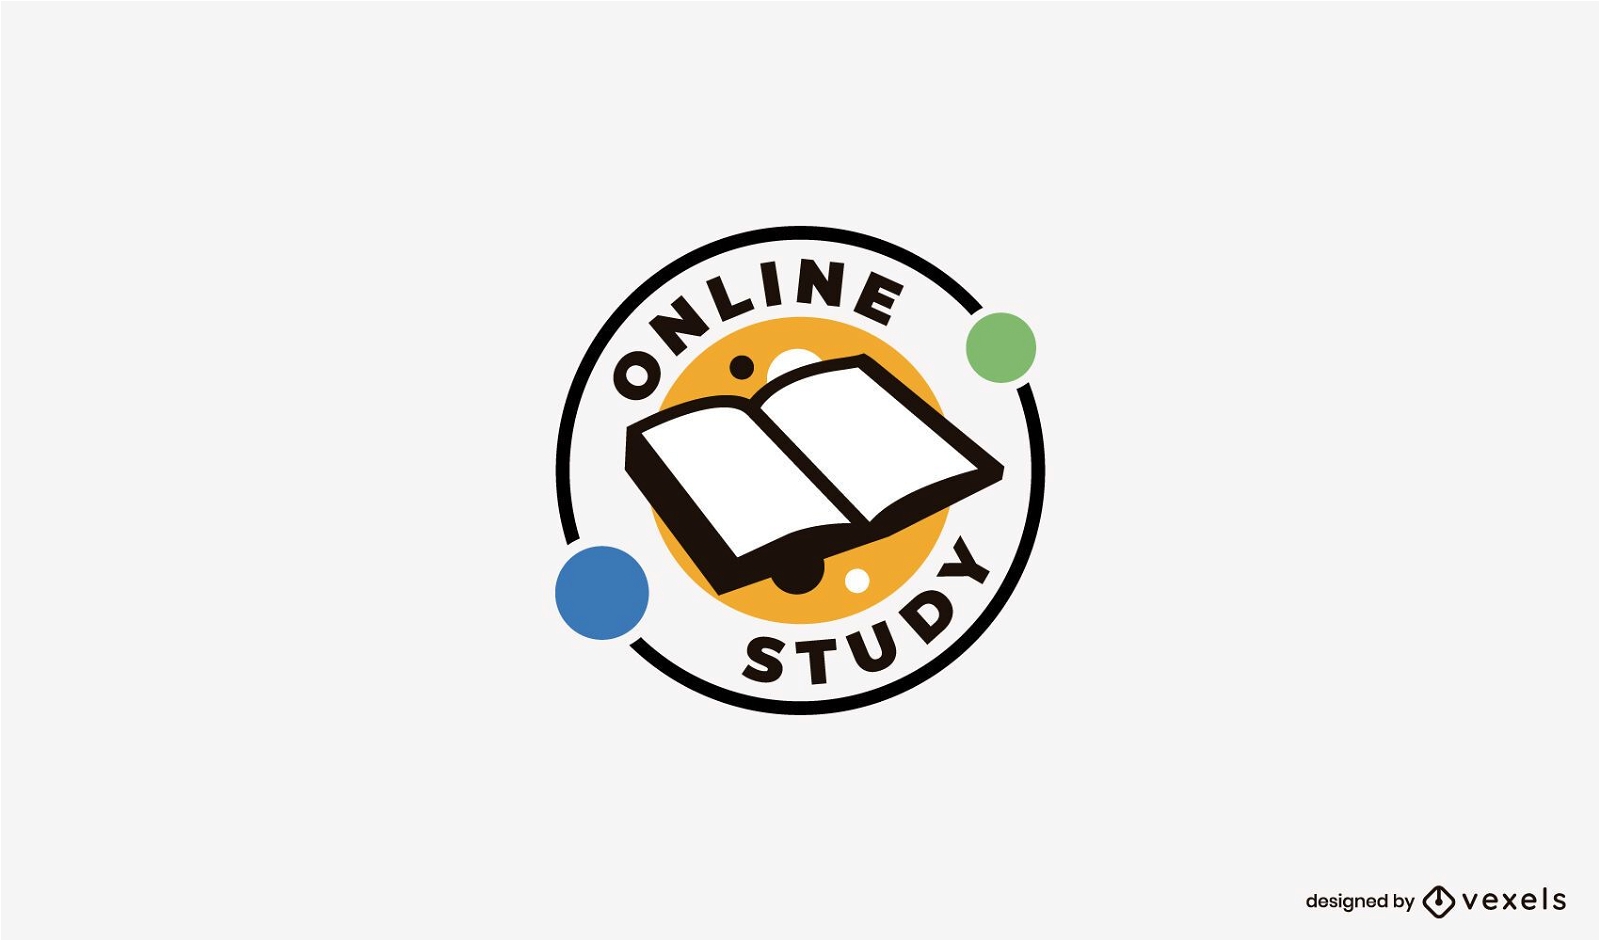 Online study logo design